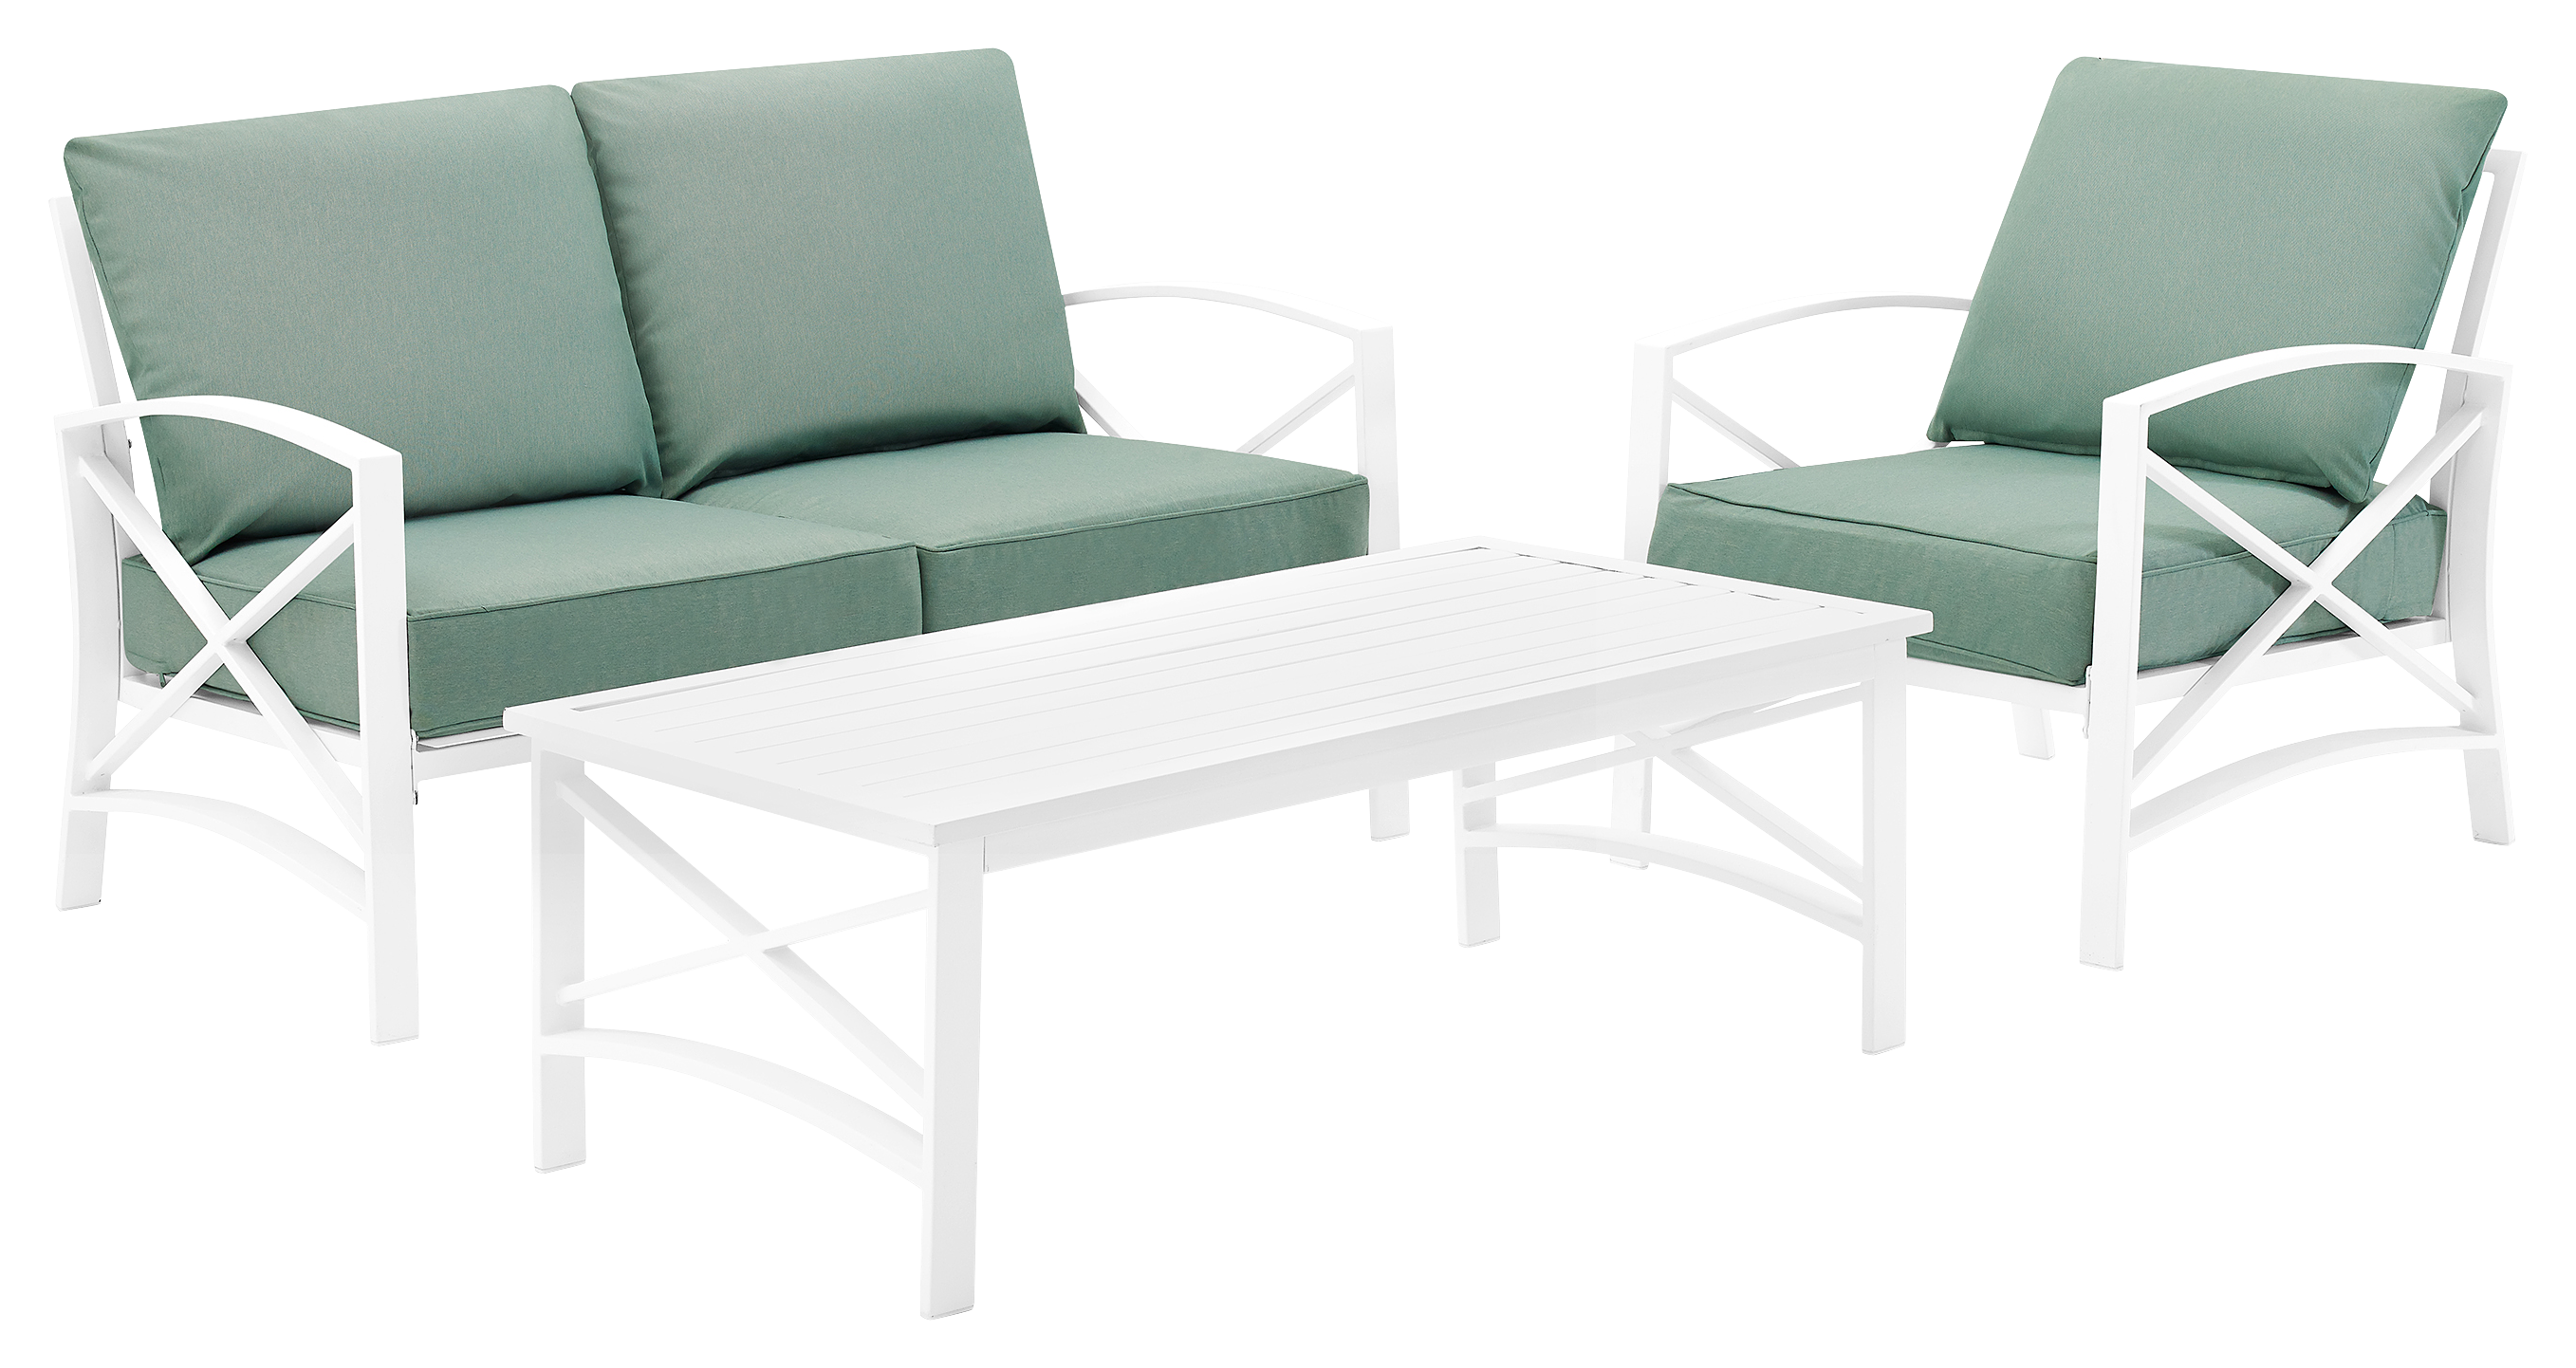 Crosley Kaplan Loveseat, Armchair, And Coffee Table 3 Piece Outdoor Metal Patio Furniture Set Mist/white